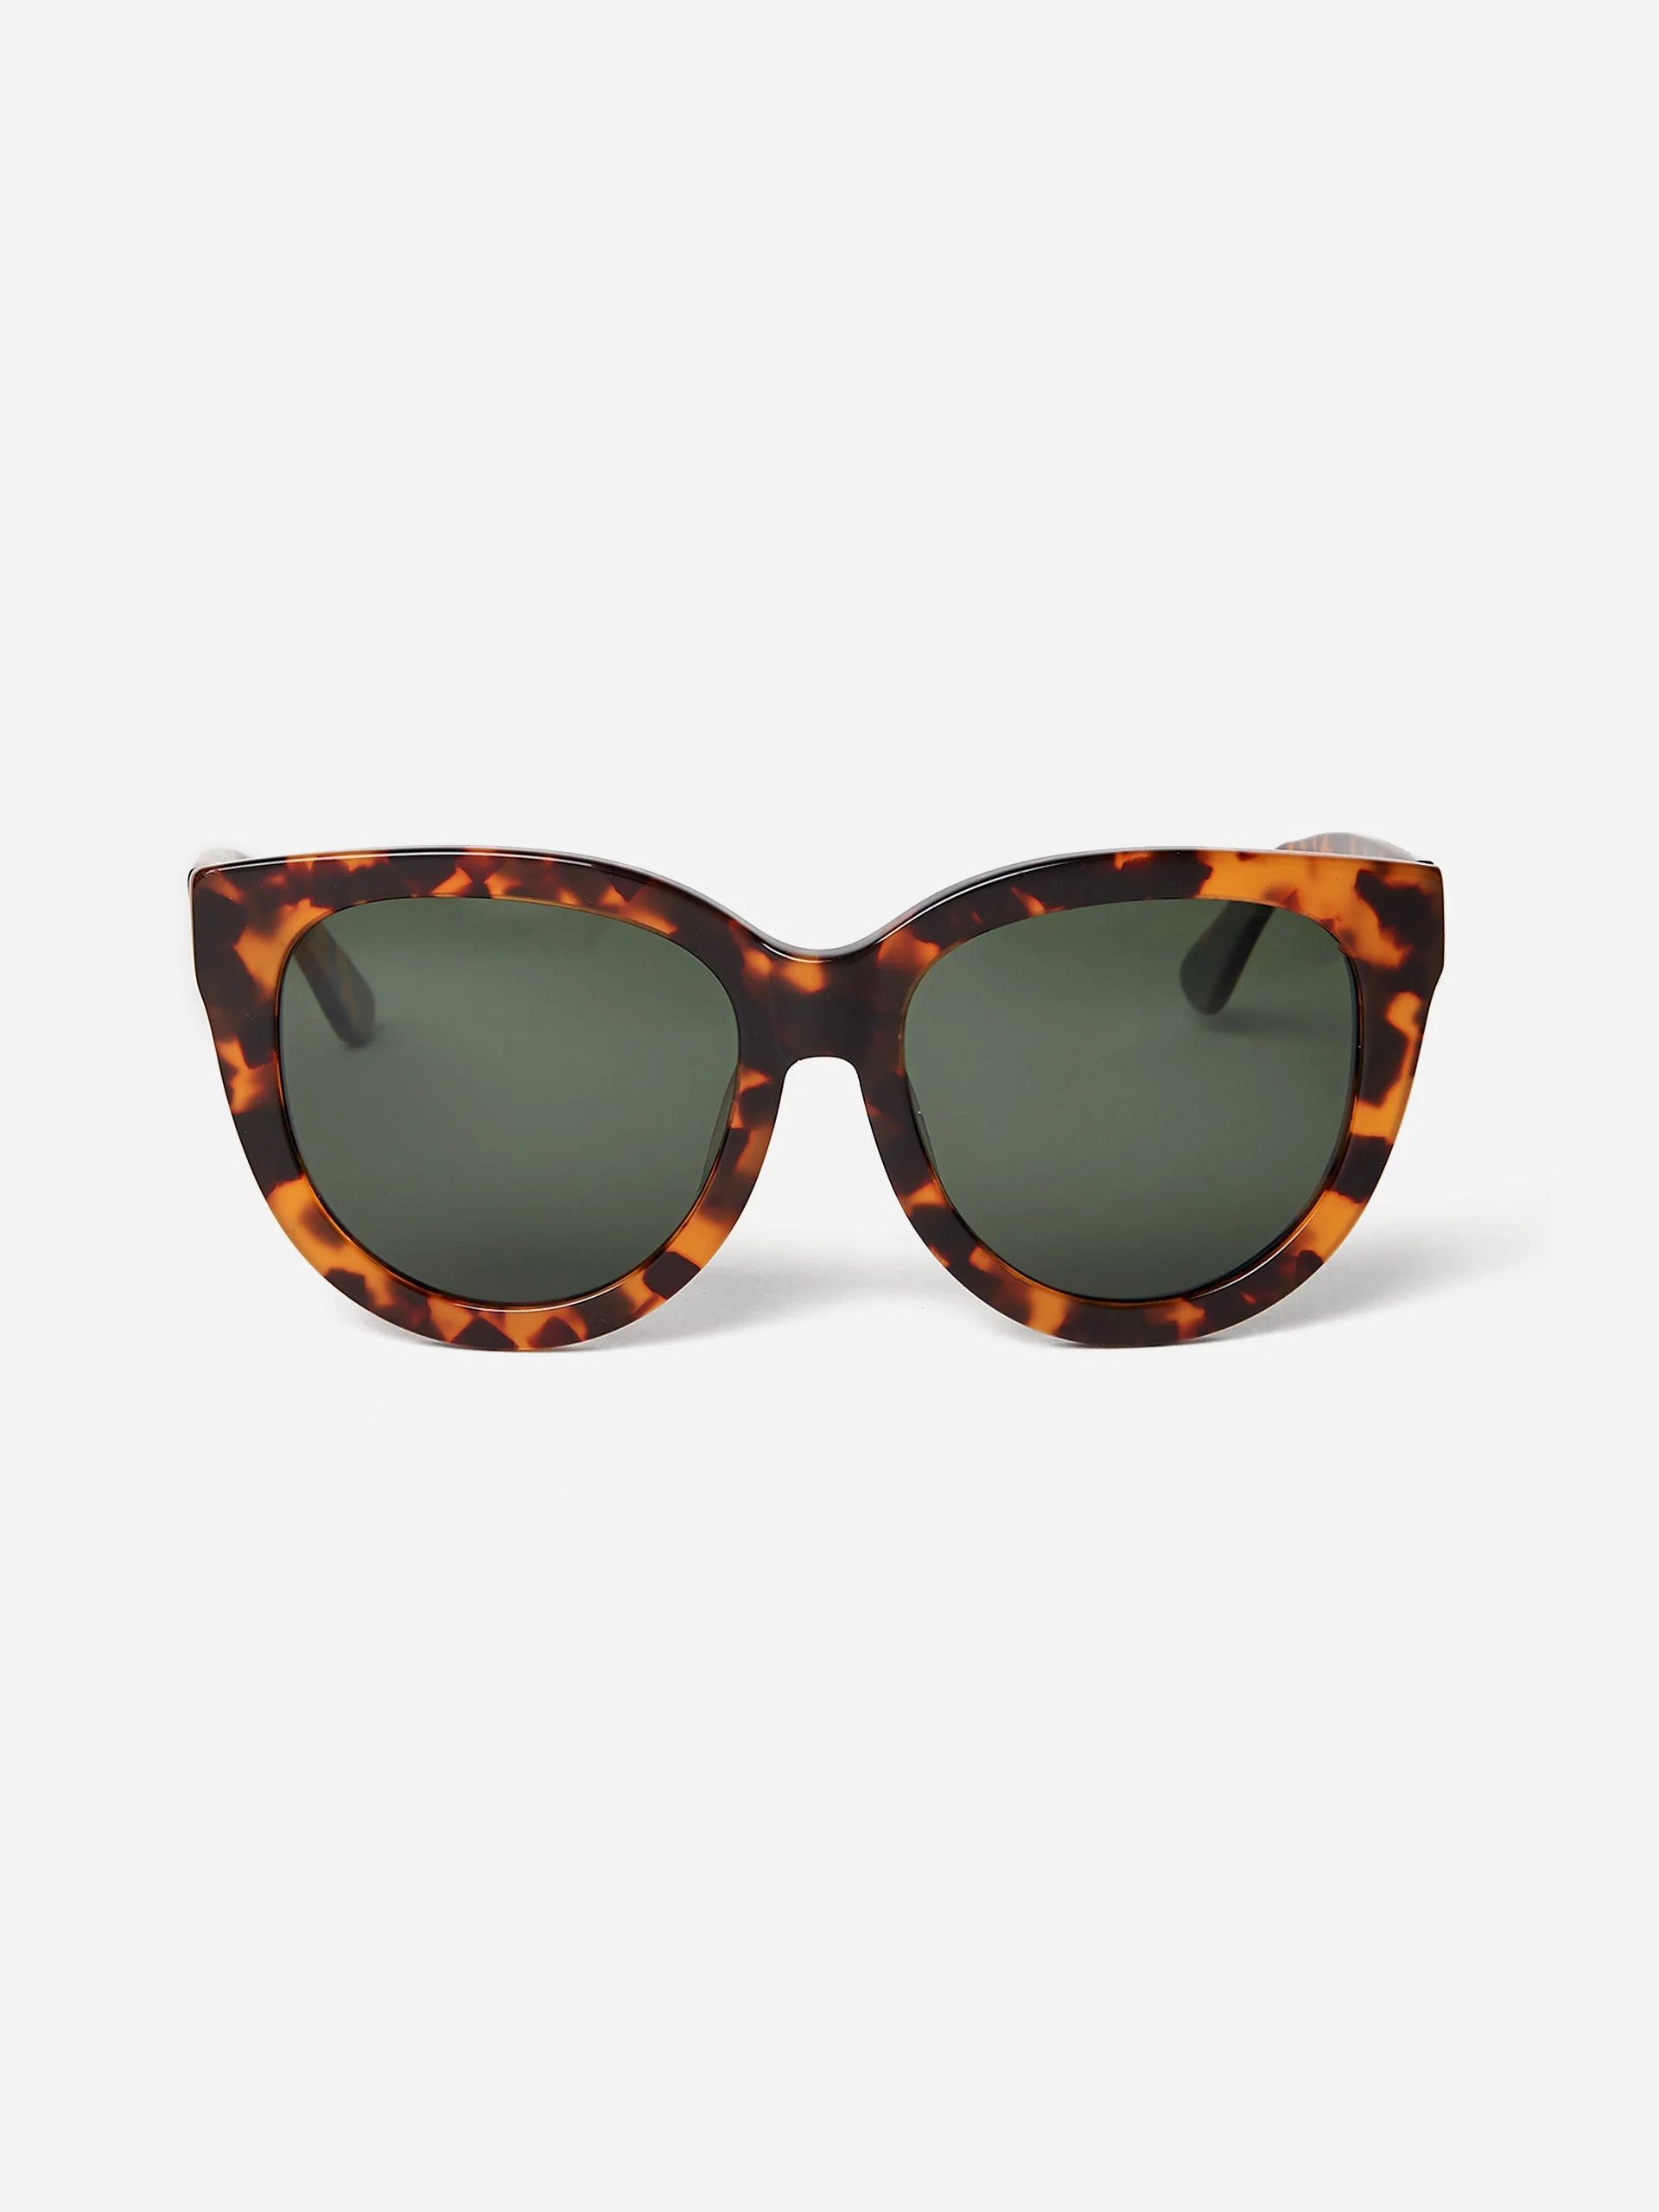 Chiara Polarized Sunglasses in Tortoise | J.McLaughlin